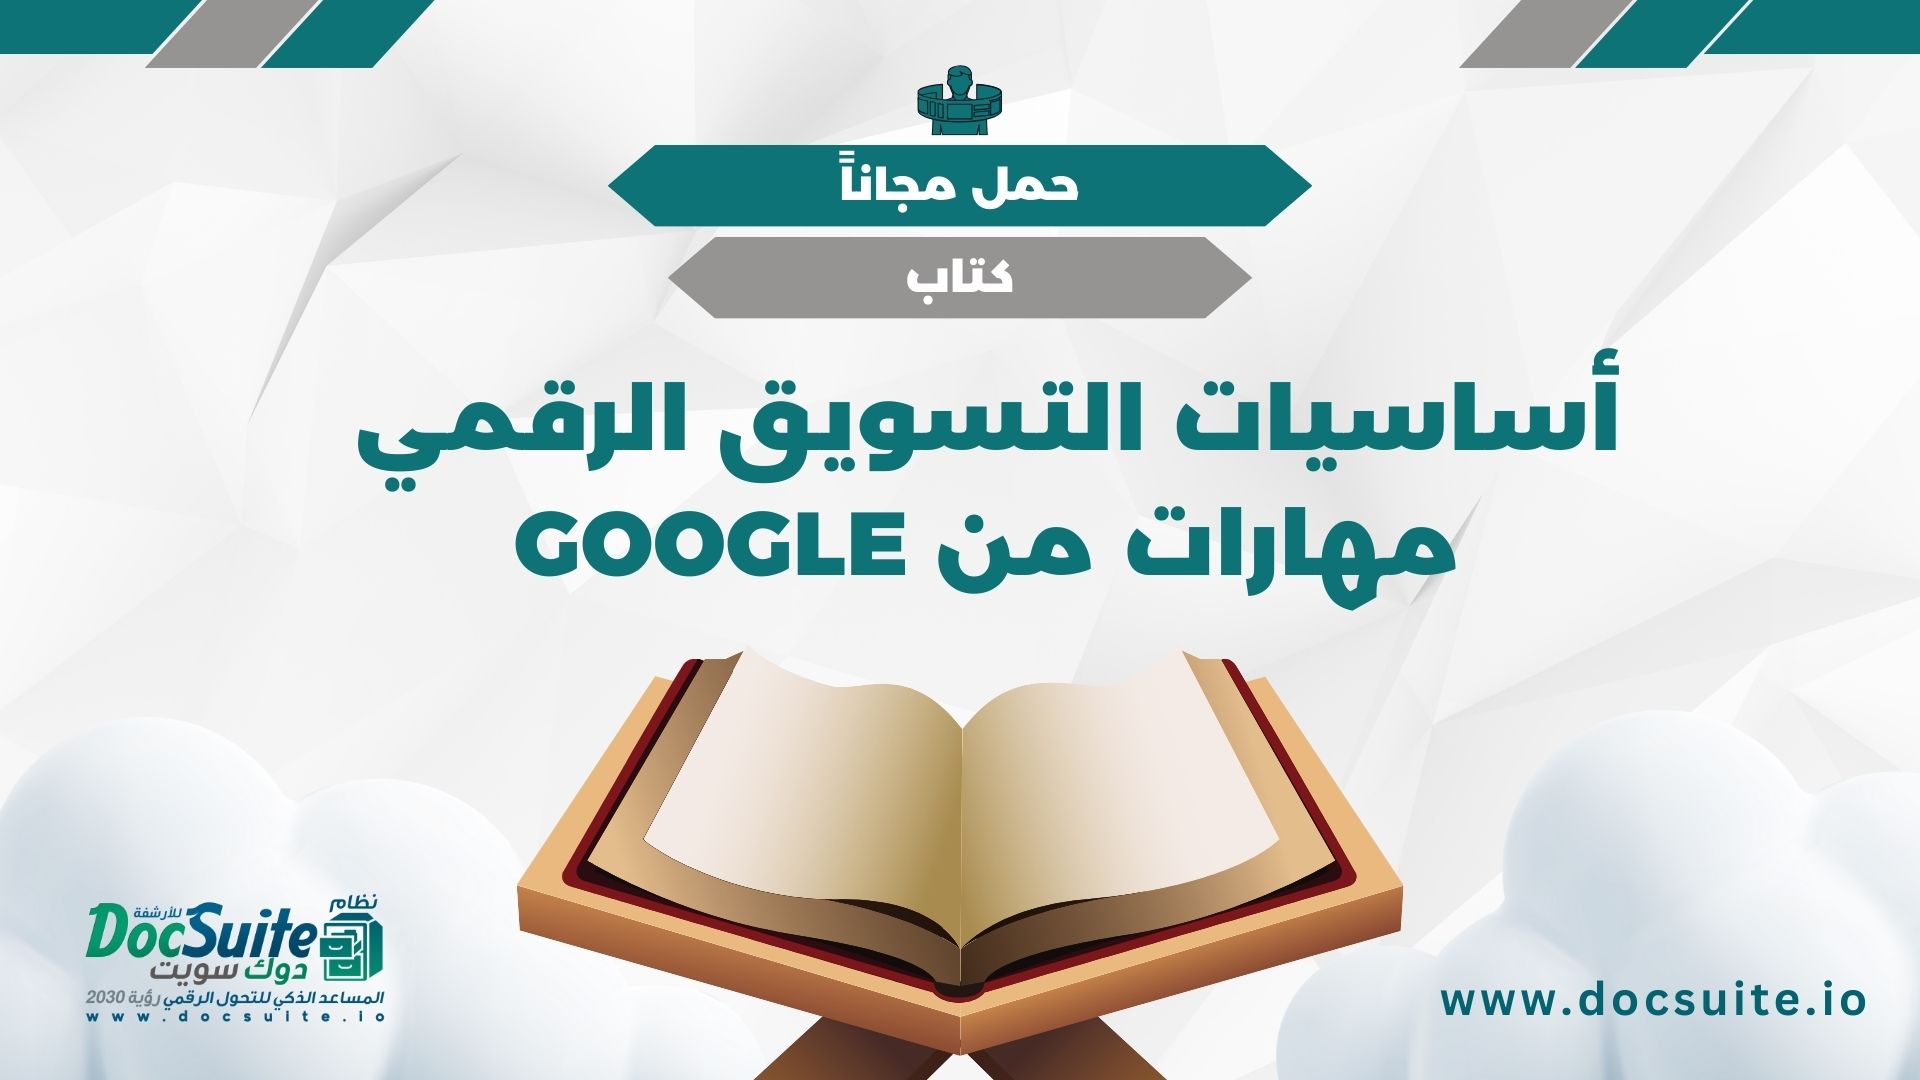 Digital Marketing Basics Book - Skills from Google